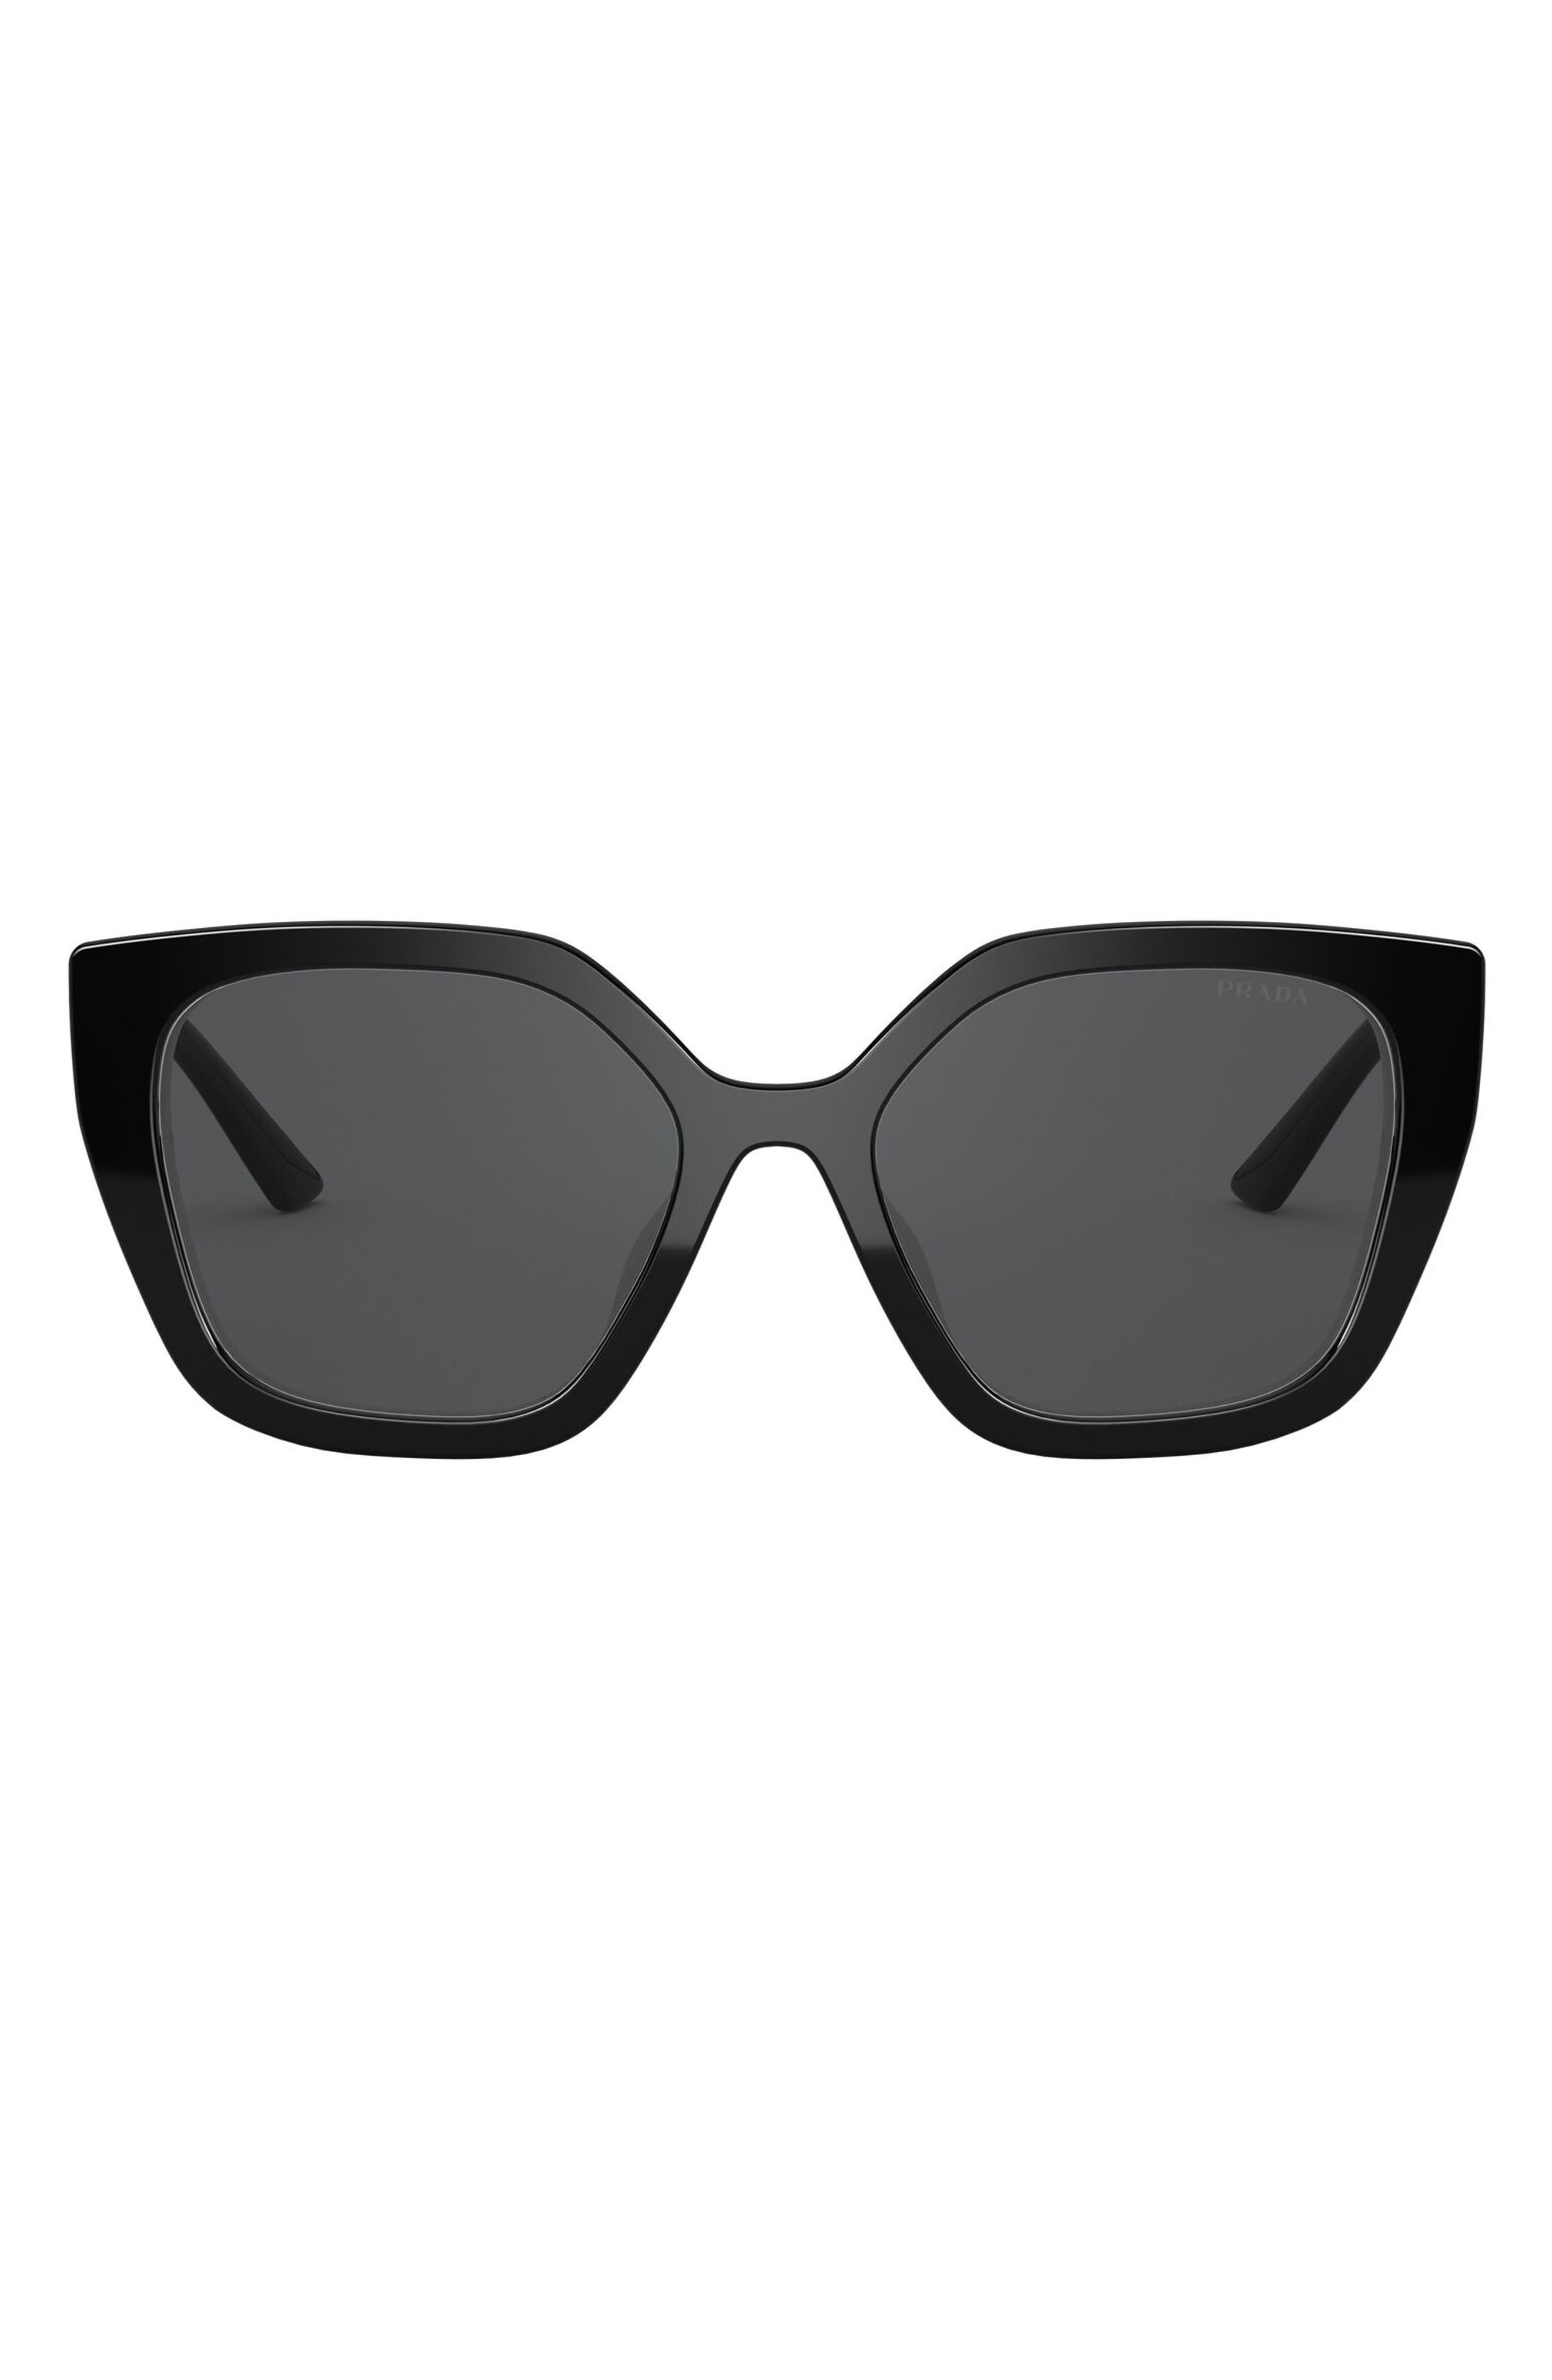 Prada 54mm Rectangular Sunglasses in Black/Ivory/Dark Grey at Nordstrom